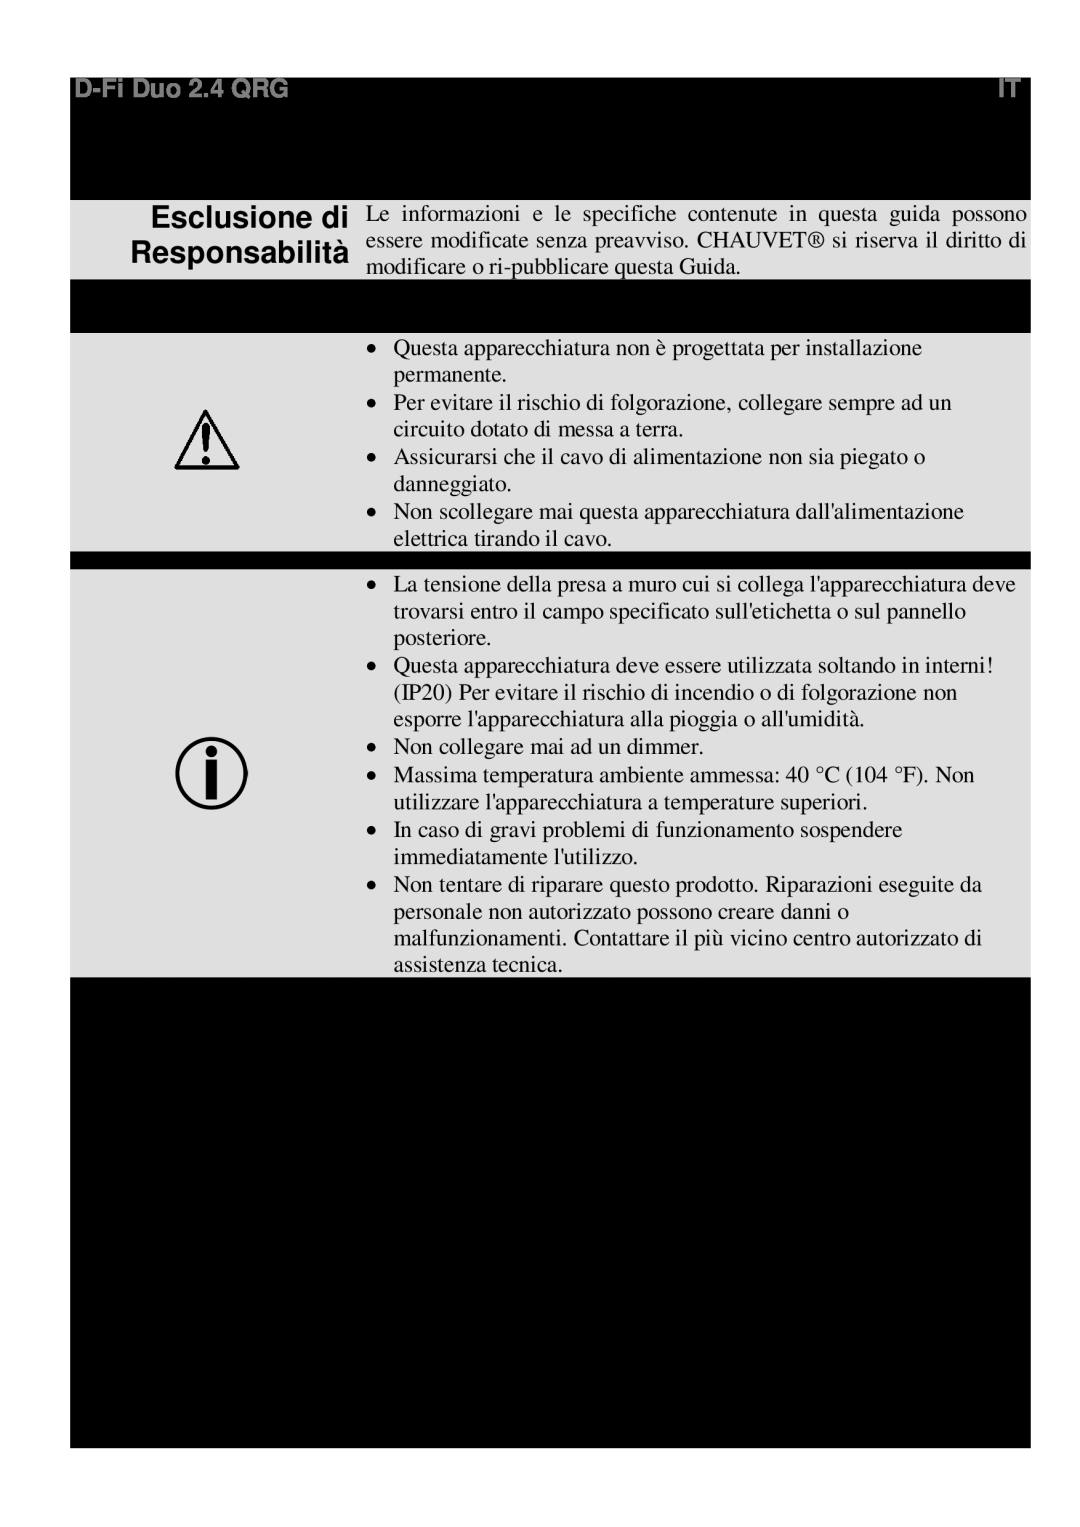 Chauvet RX, TX manual Informazioni sulla Guida Esclusione di Responsabilità, Note di Sicurezza, D-Fi Duo 2.4 QRG 